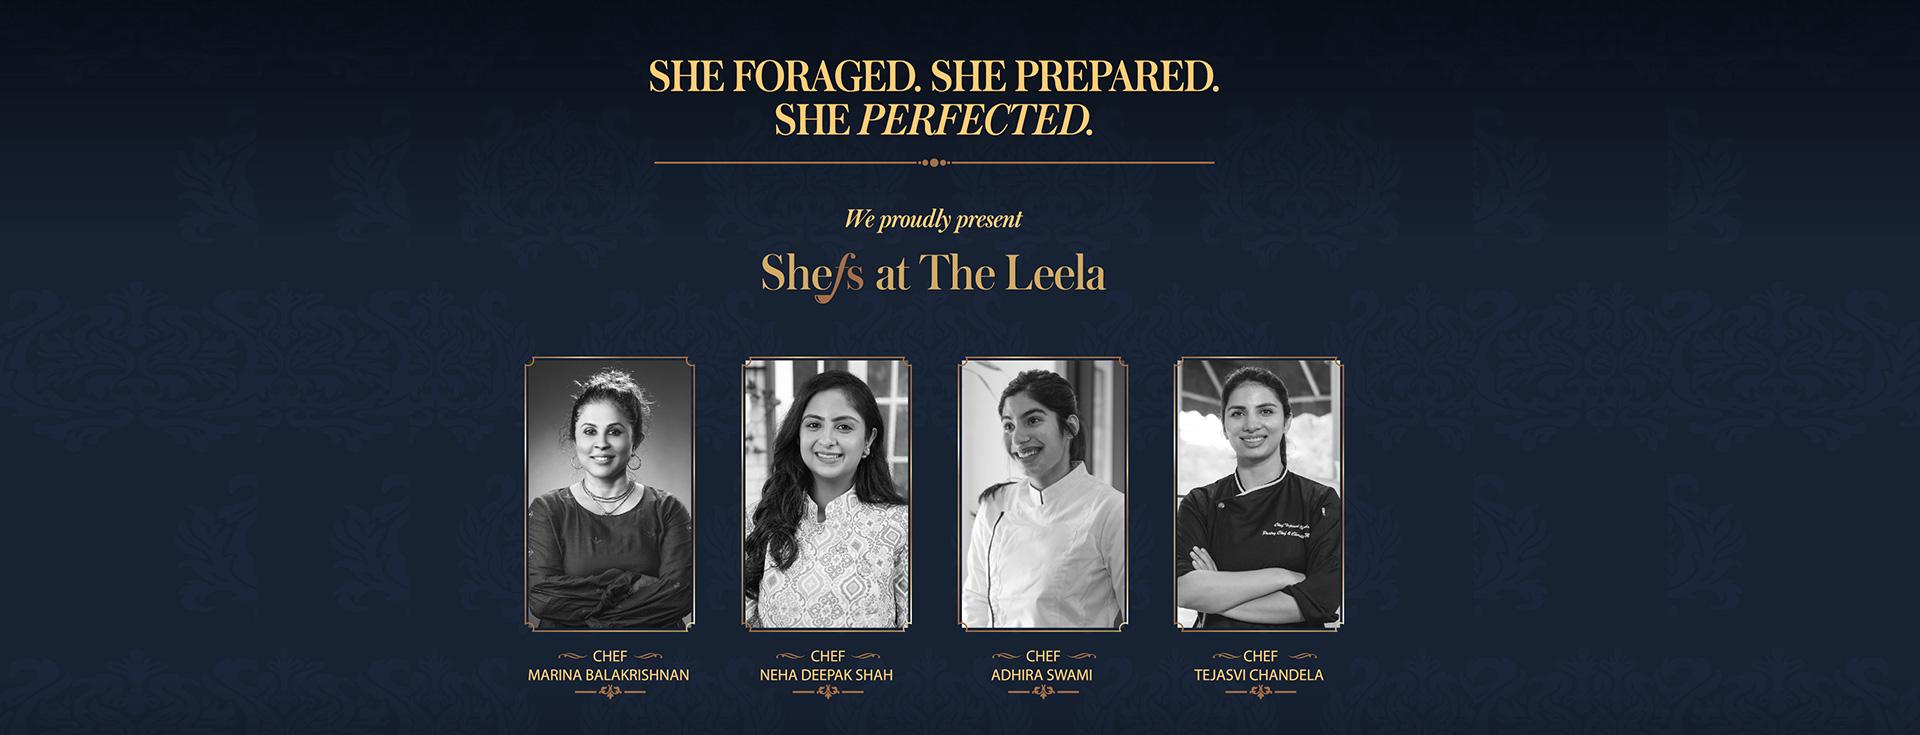 Shefs at The Leela - A unique celebration of women chefs